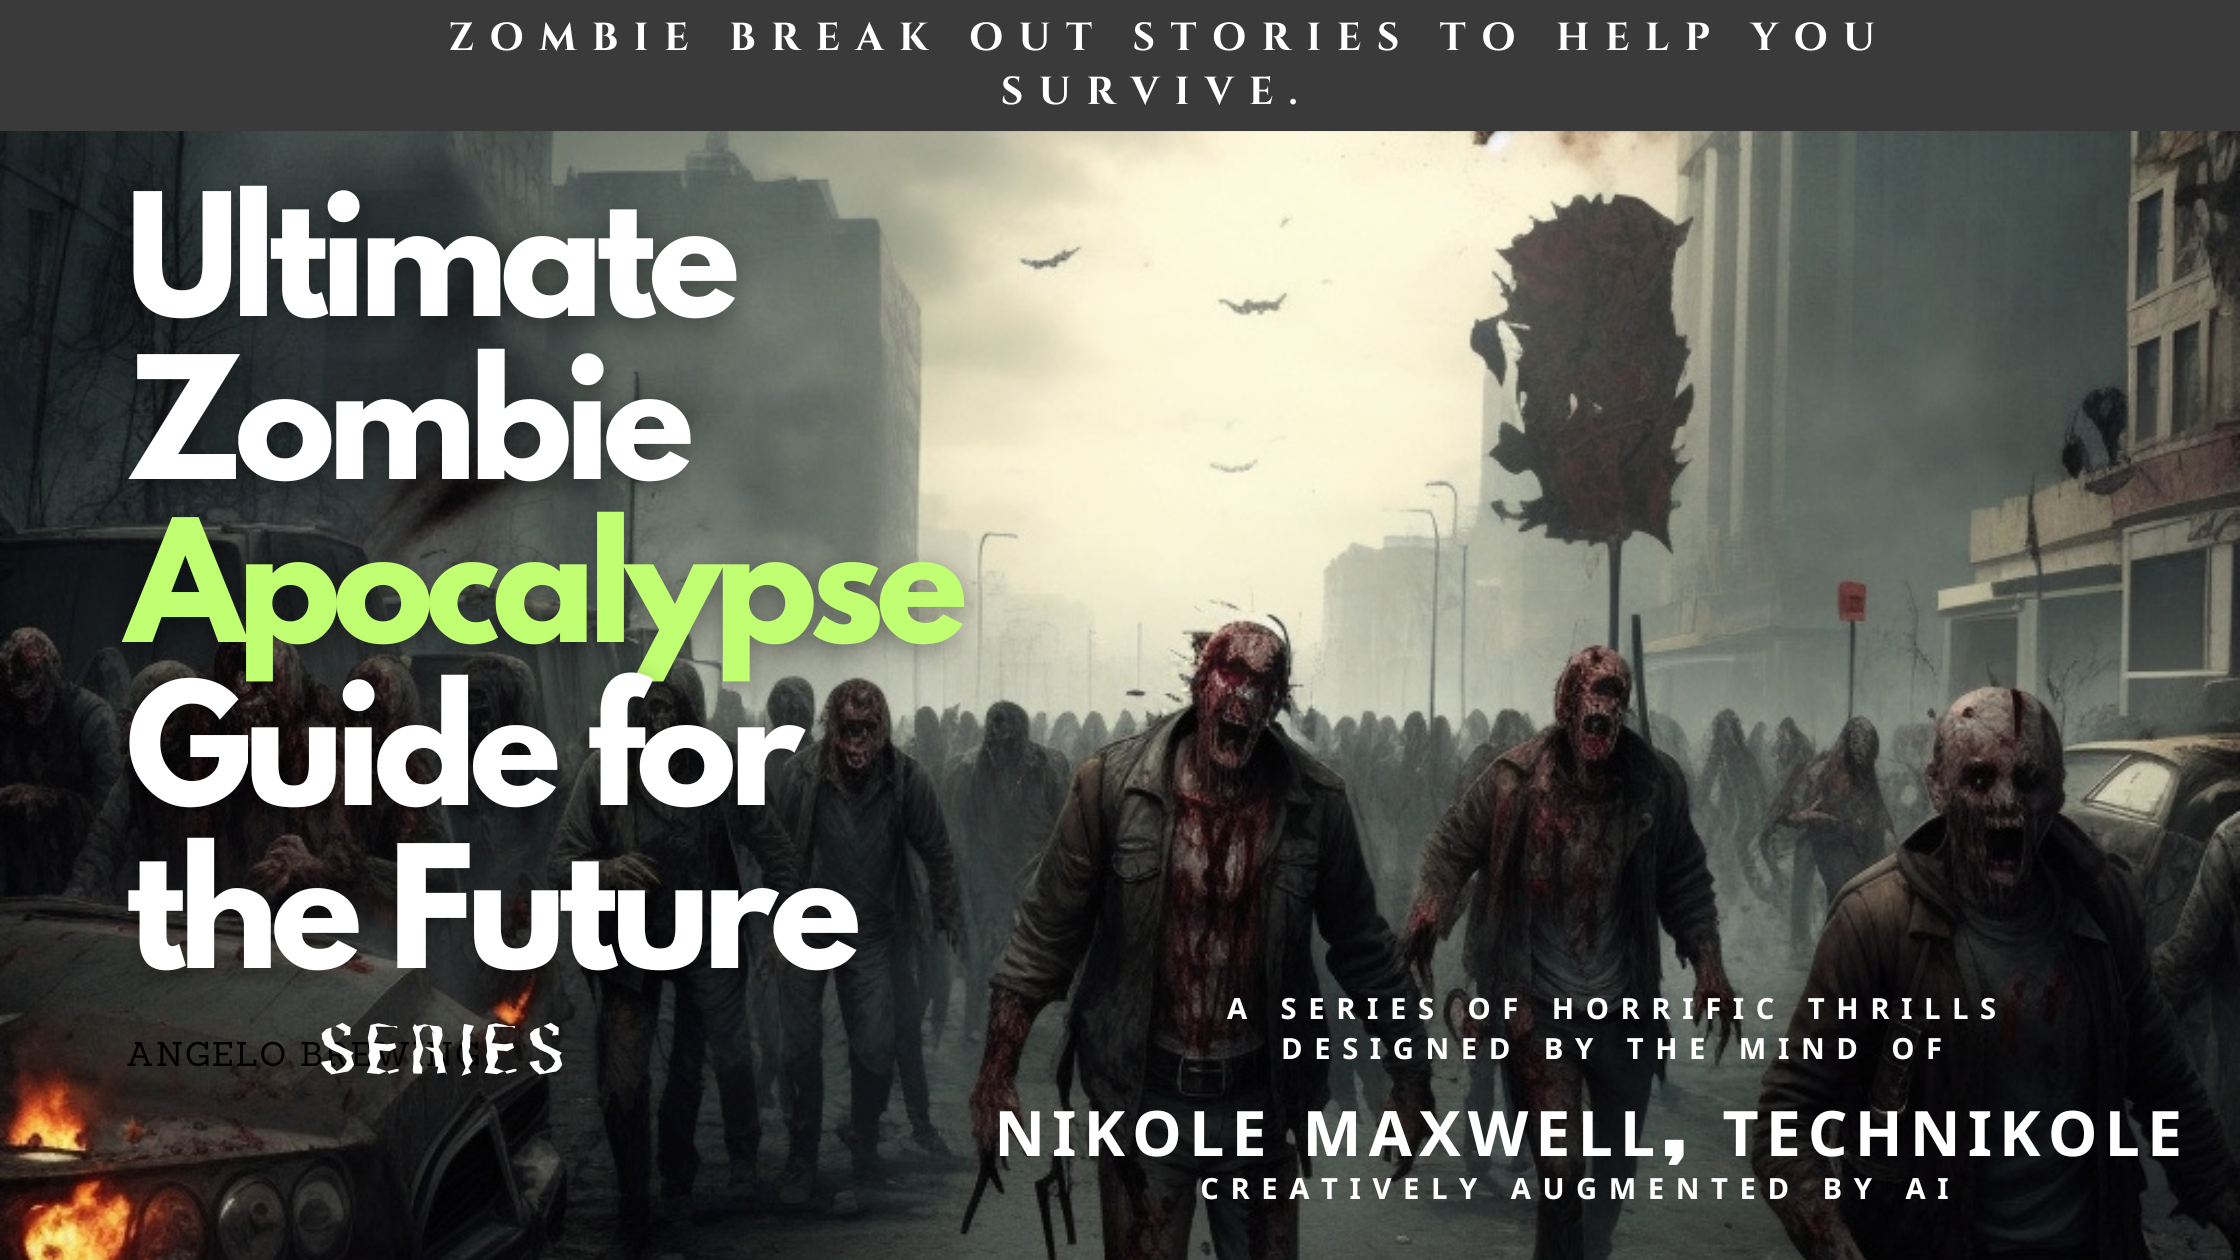 Ultimate Zombie Apocalypse Guide for the Future (Series) By NiKole Maxwell, “Technikole”